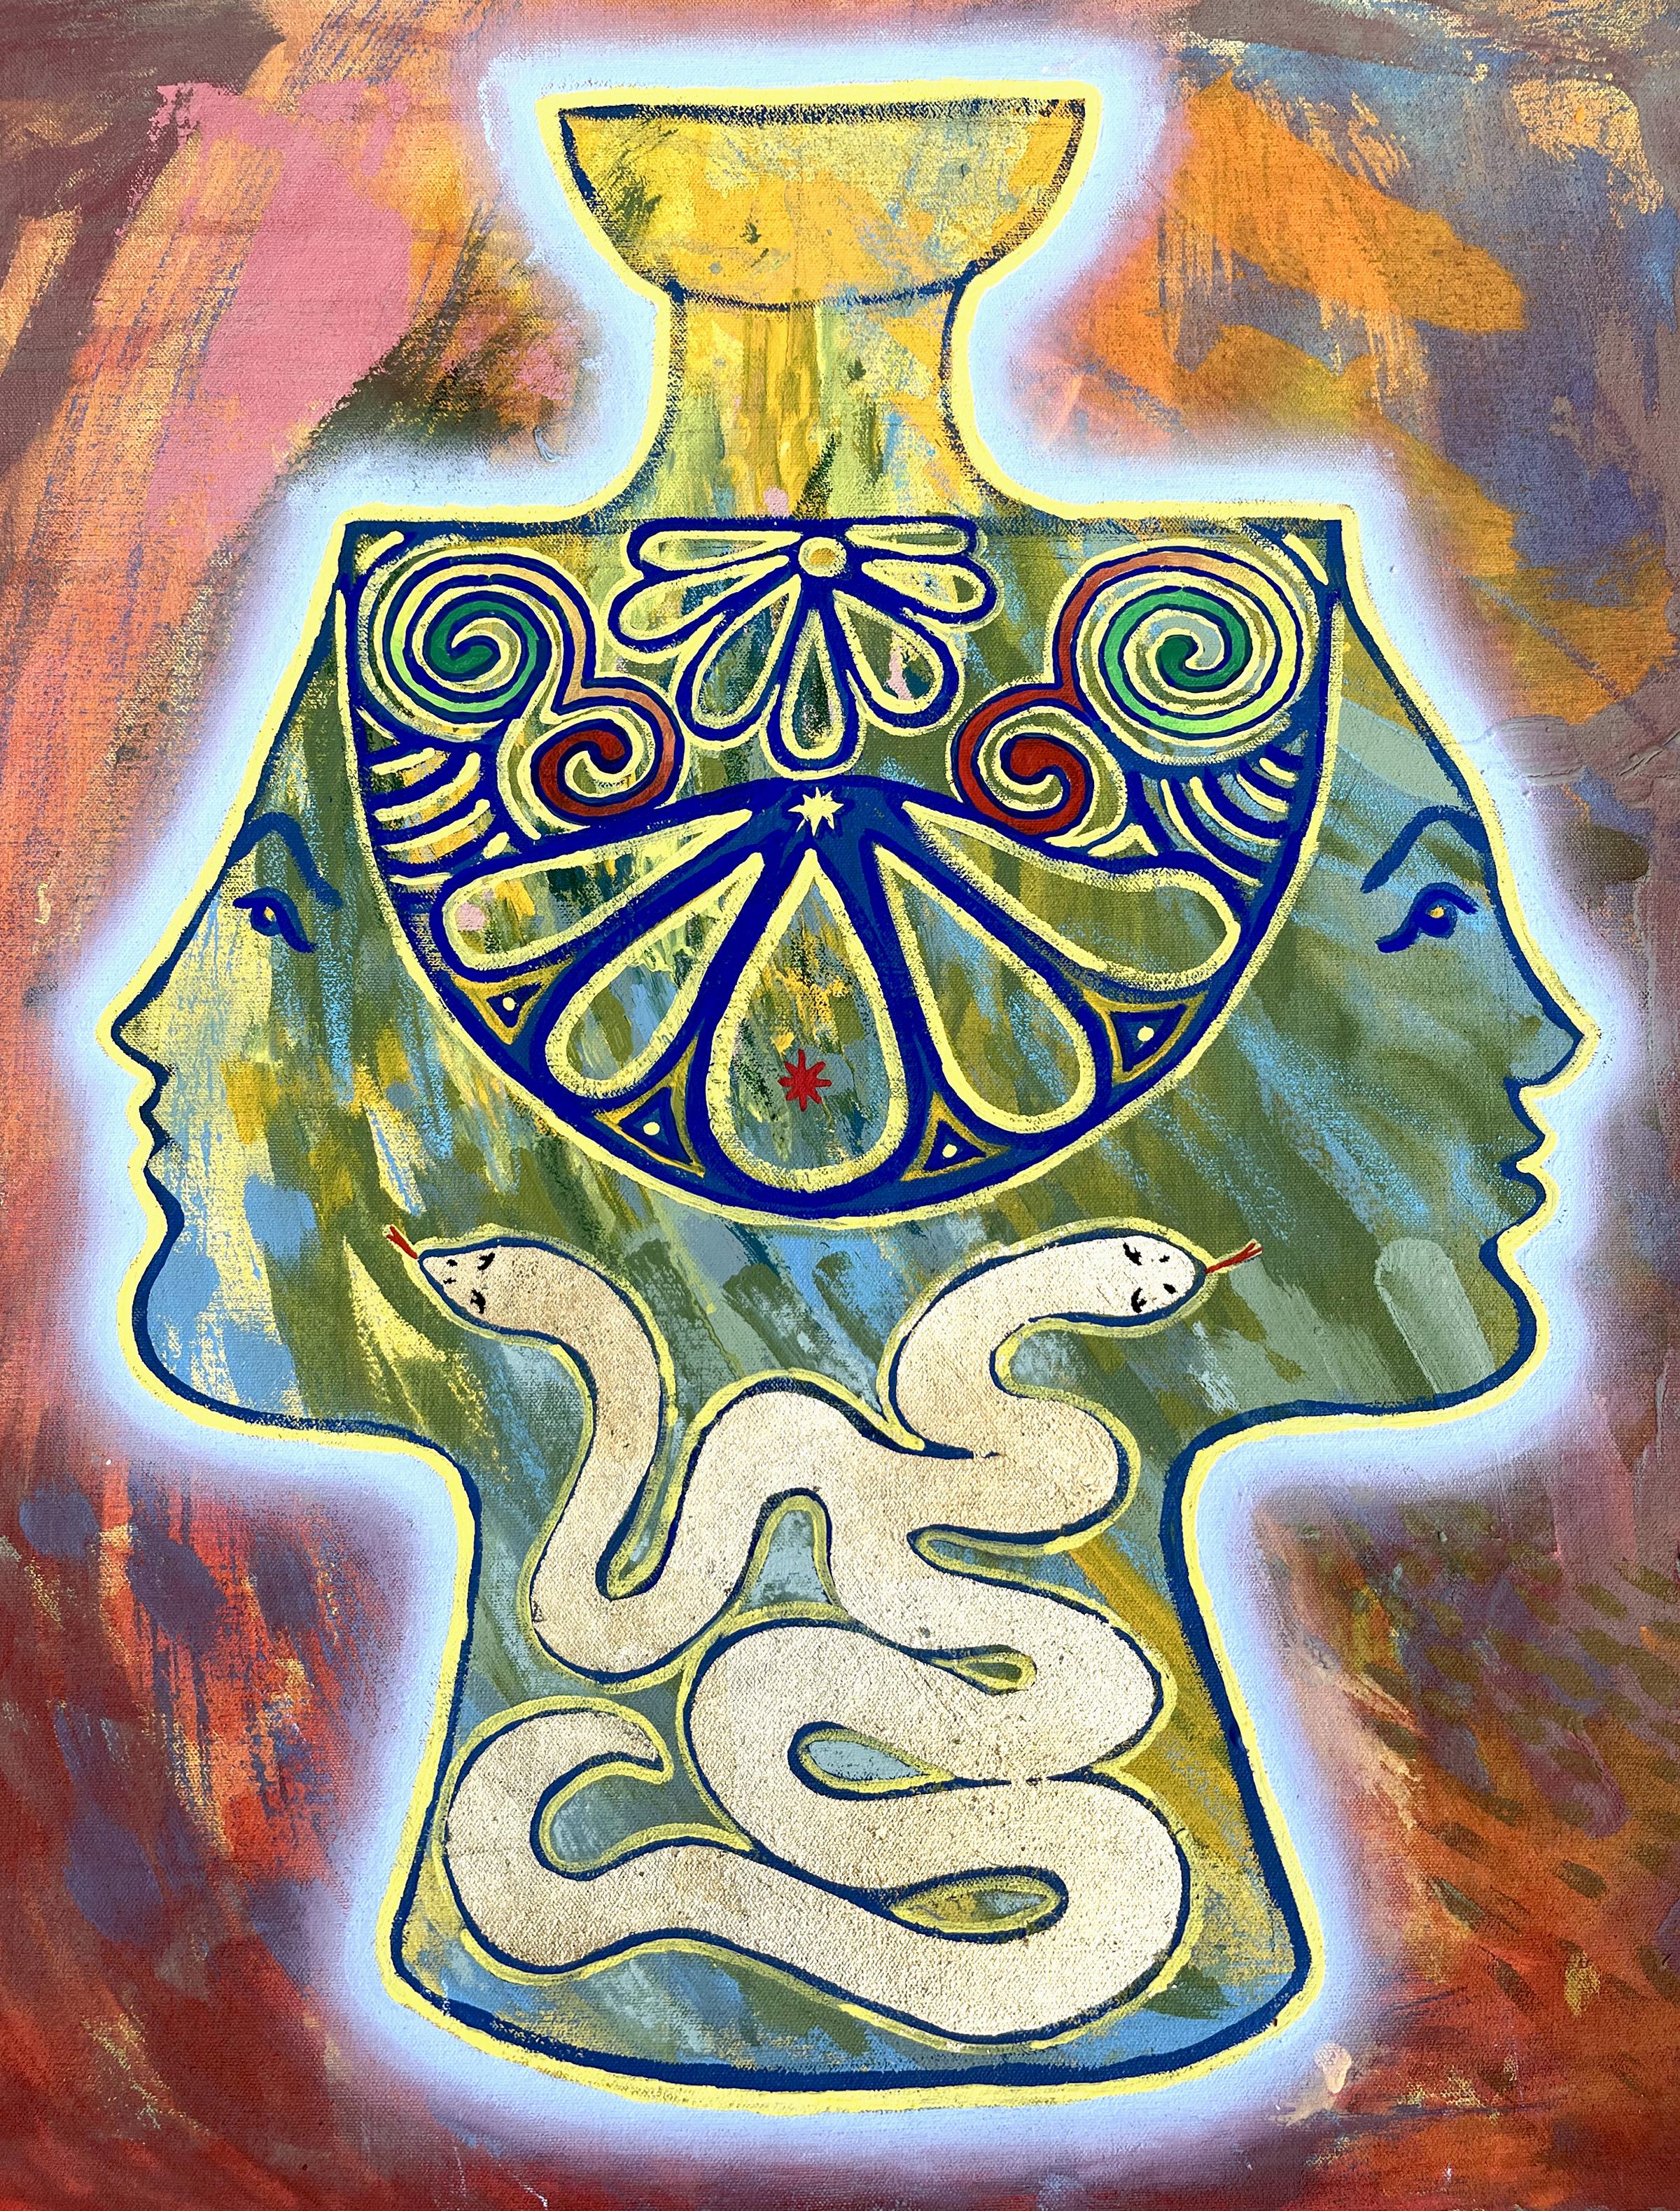 Shelby Little Figurative Painting - 'Janus' - figurative - fauvism - colorful - portrait - Greek mythology - snakes